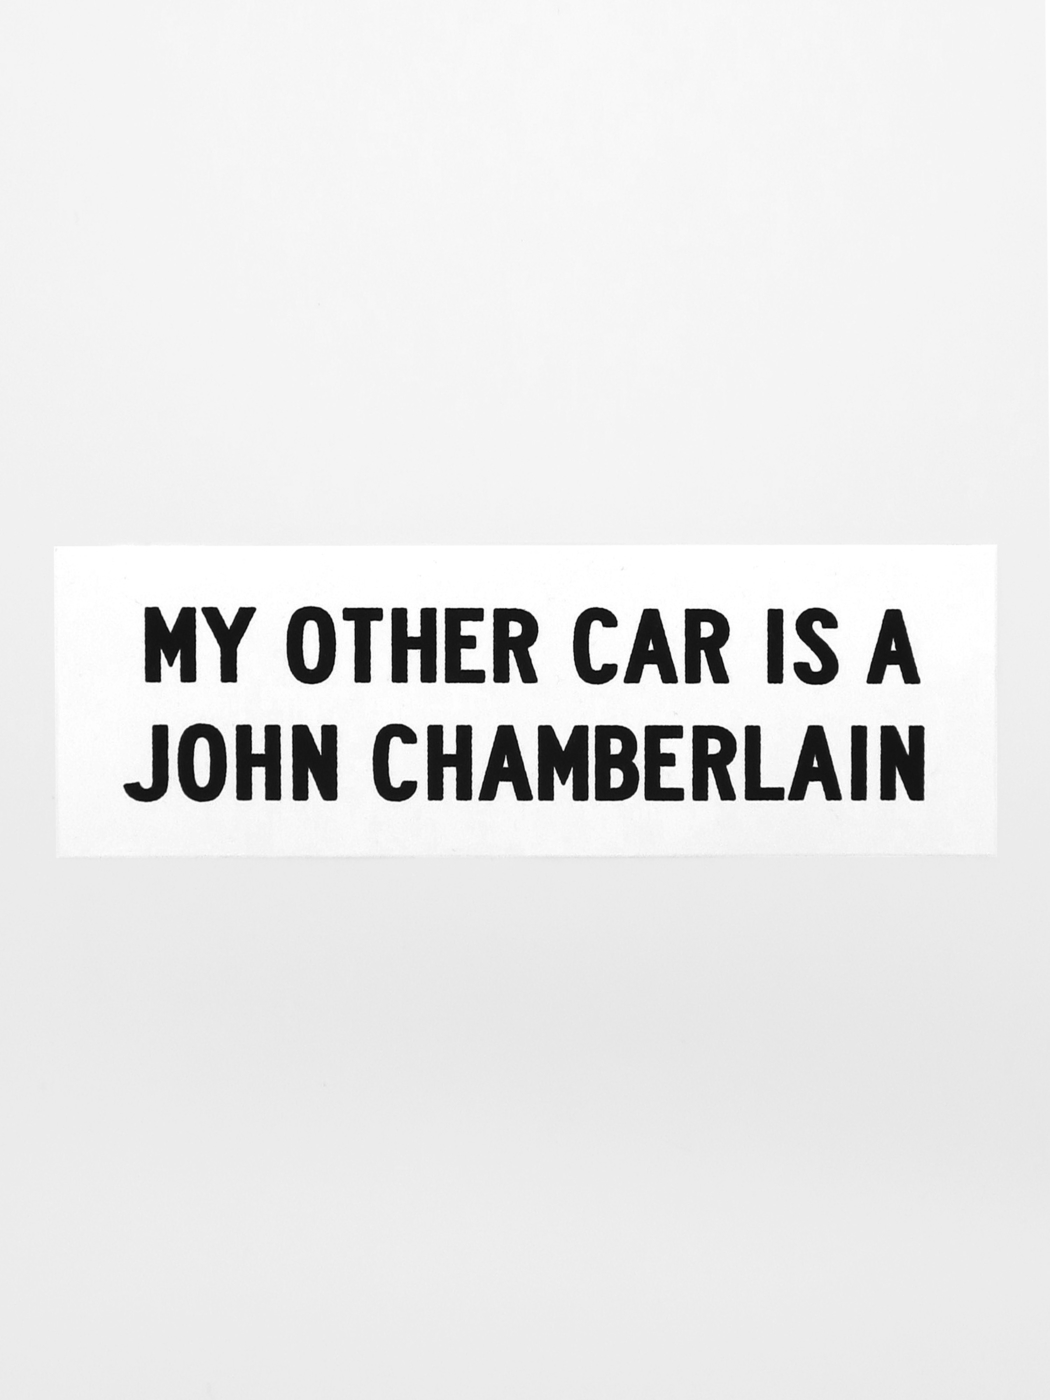 My Other Car is a John Chamberlain